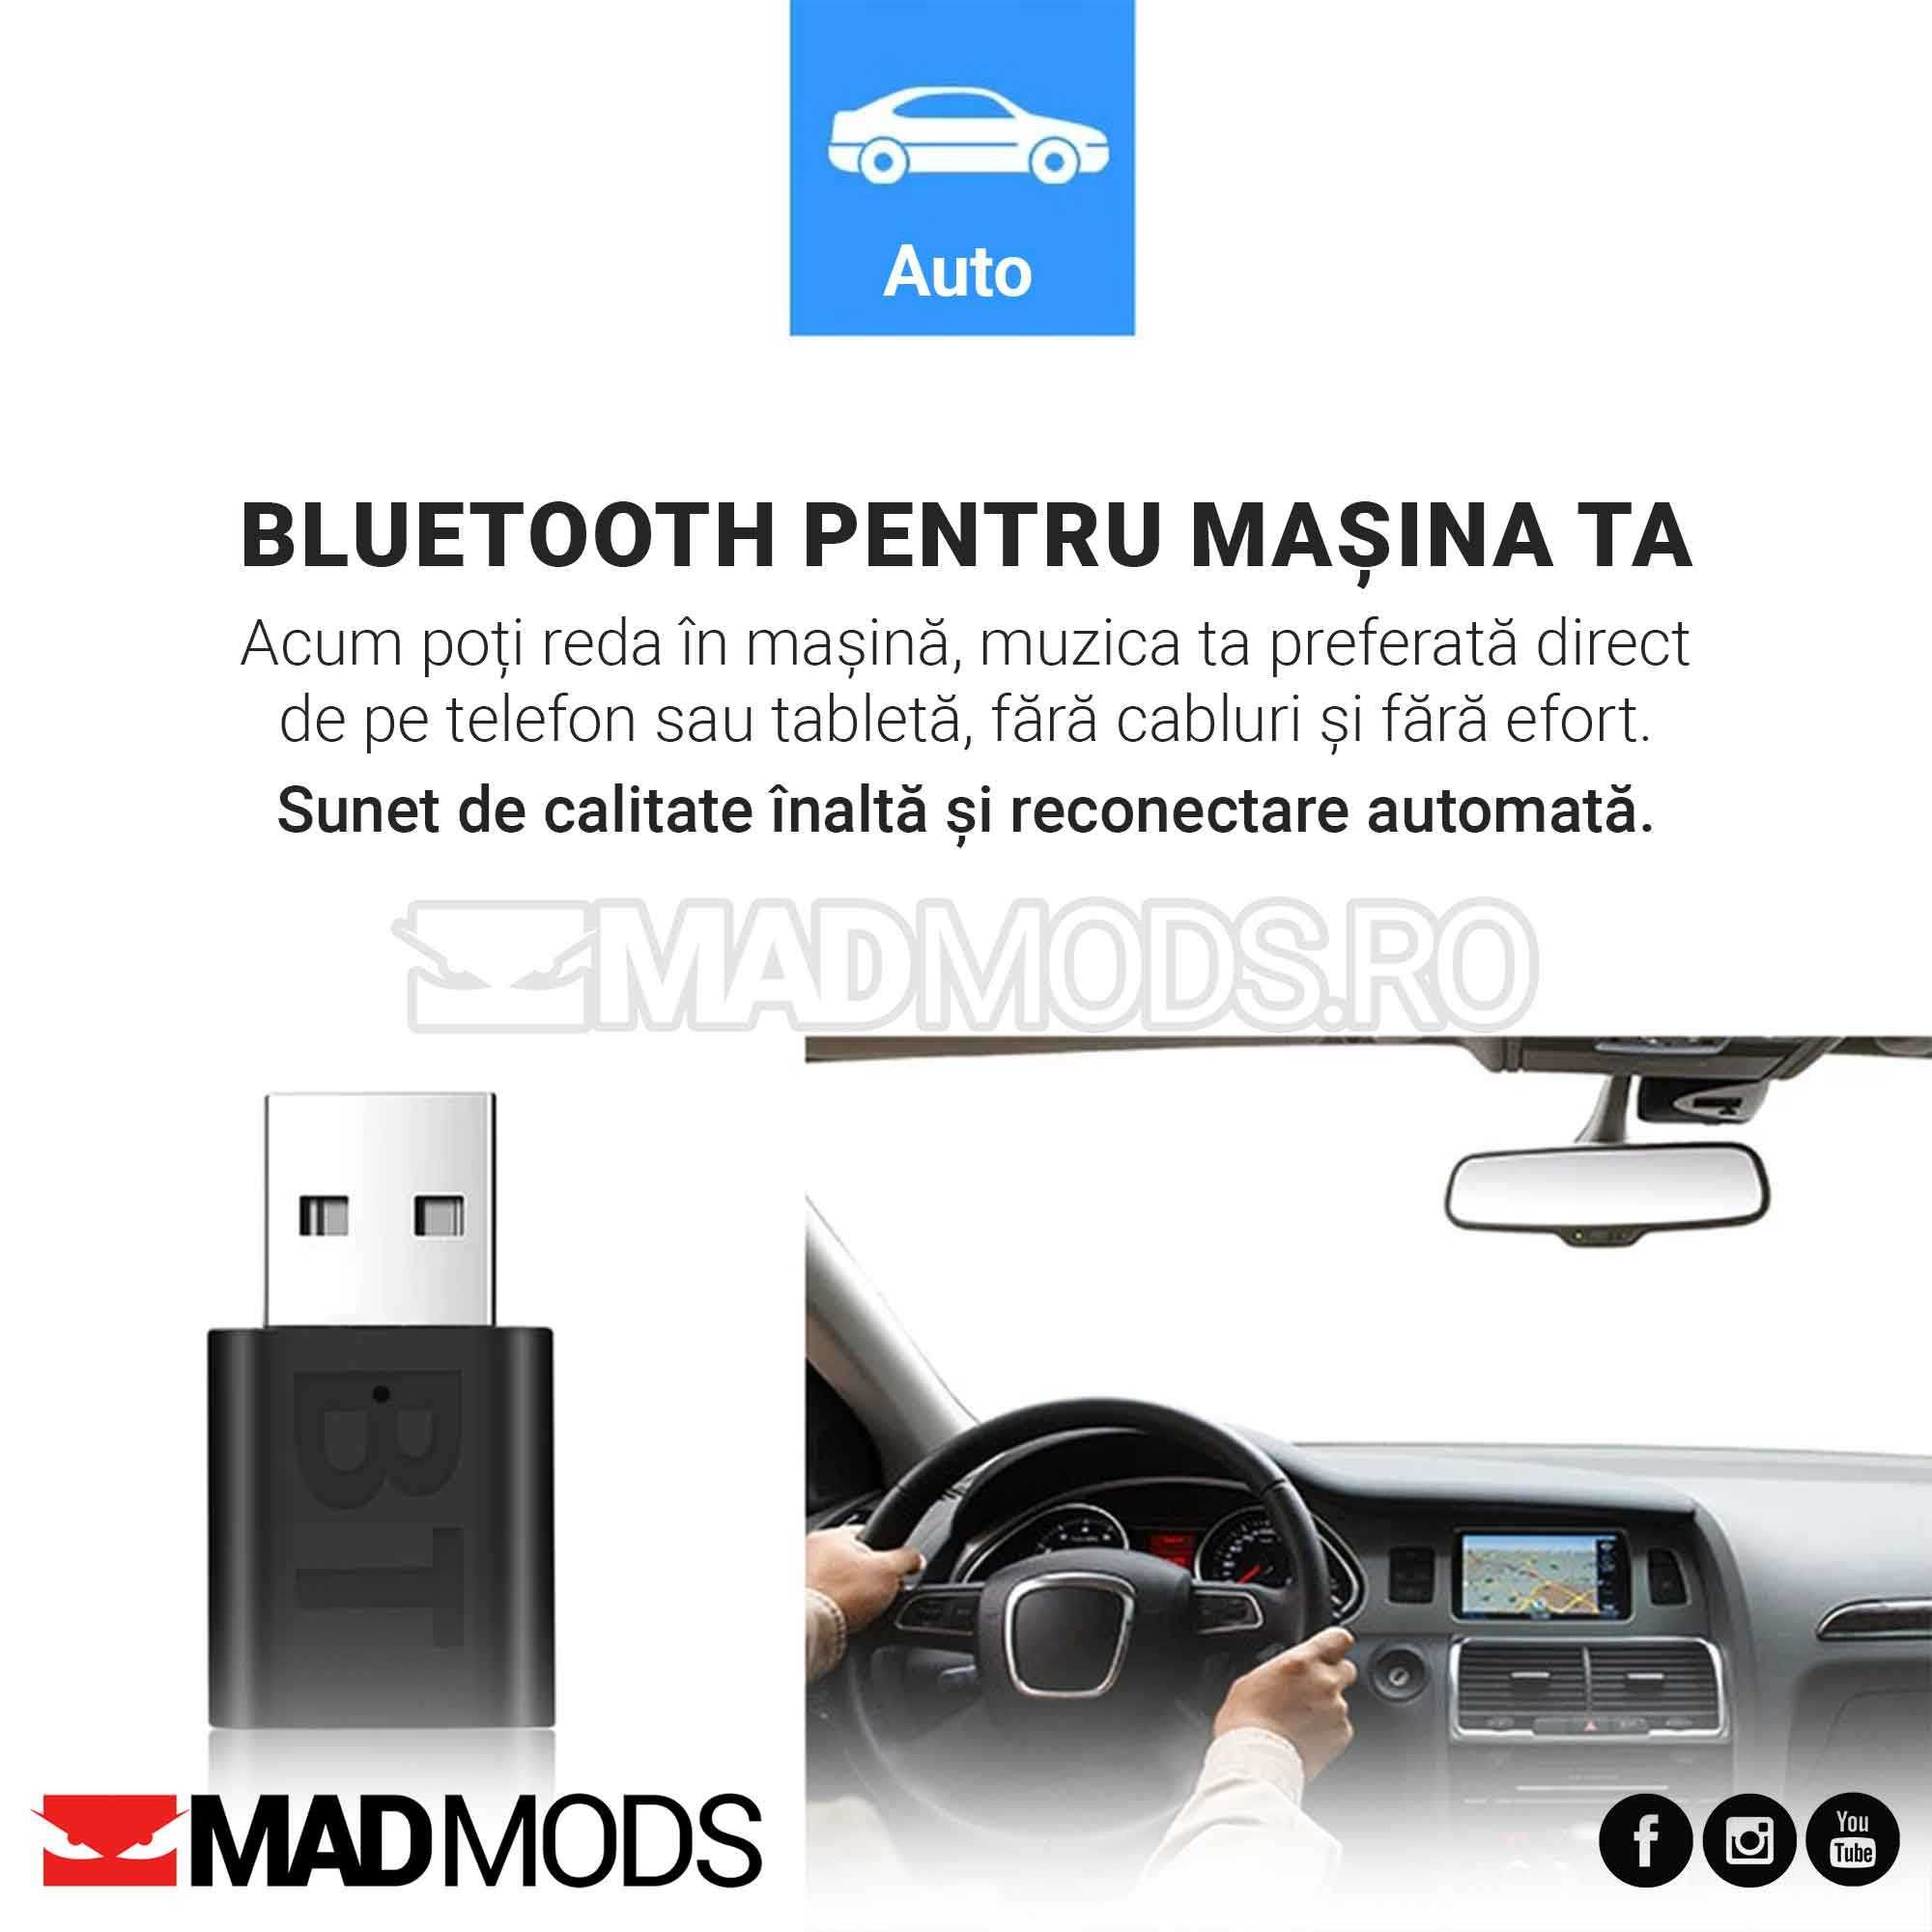 Adaptor Audio Bluetooth Aux Auto, compatibil BMW Audi Skoda Vw etc